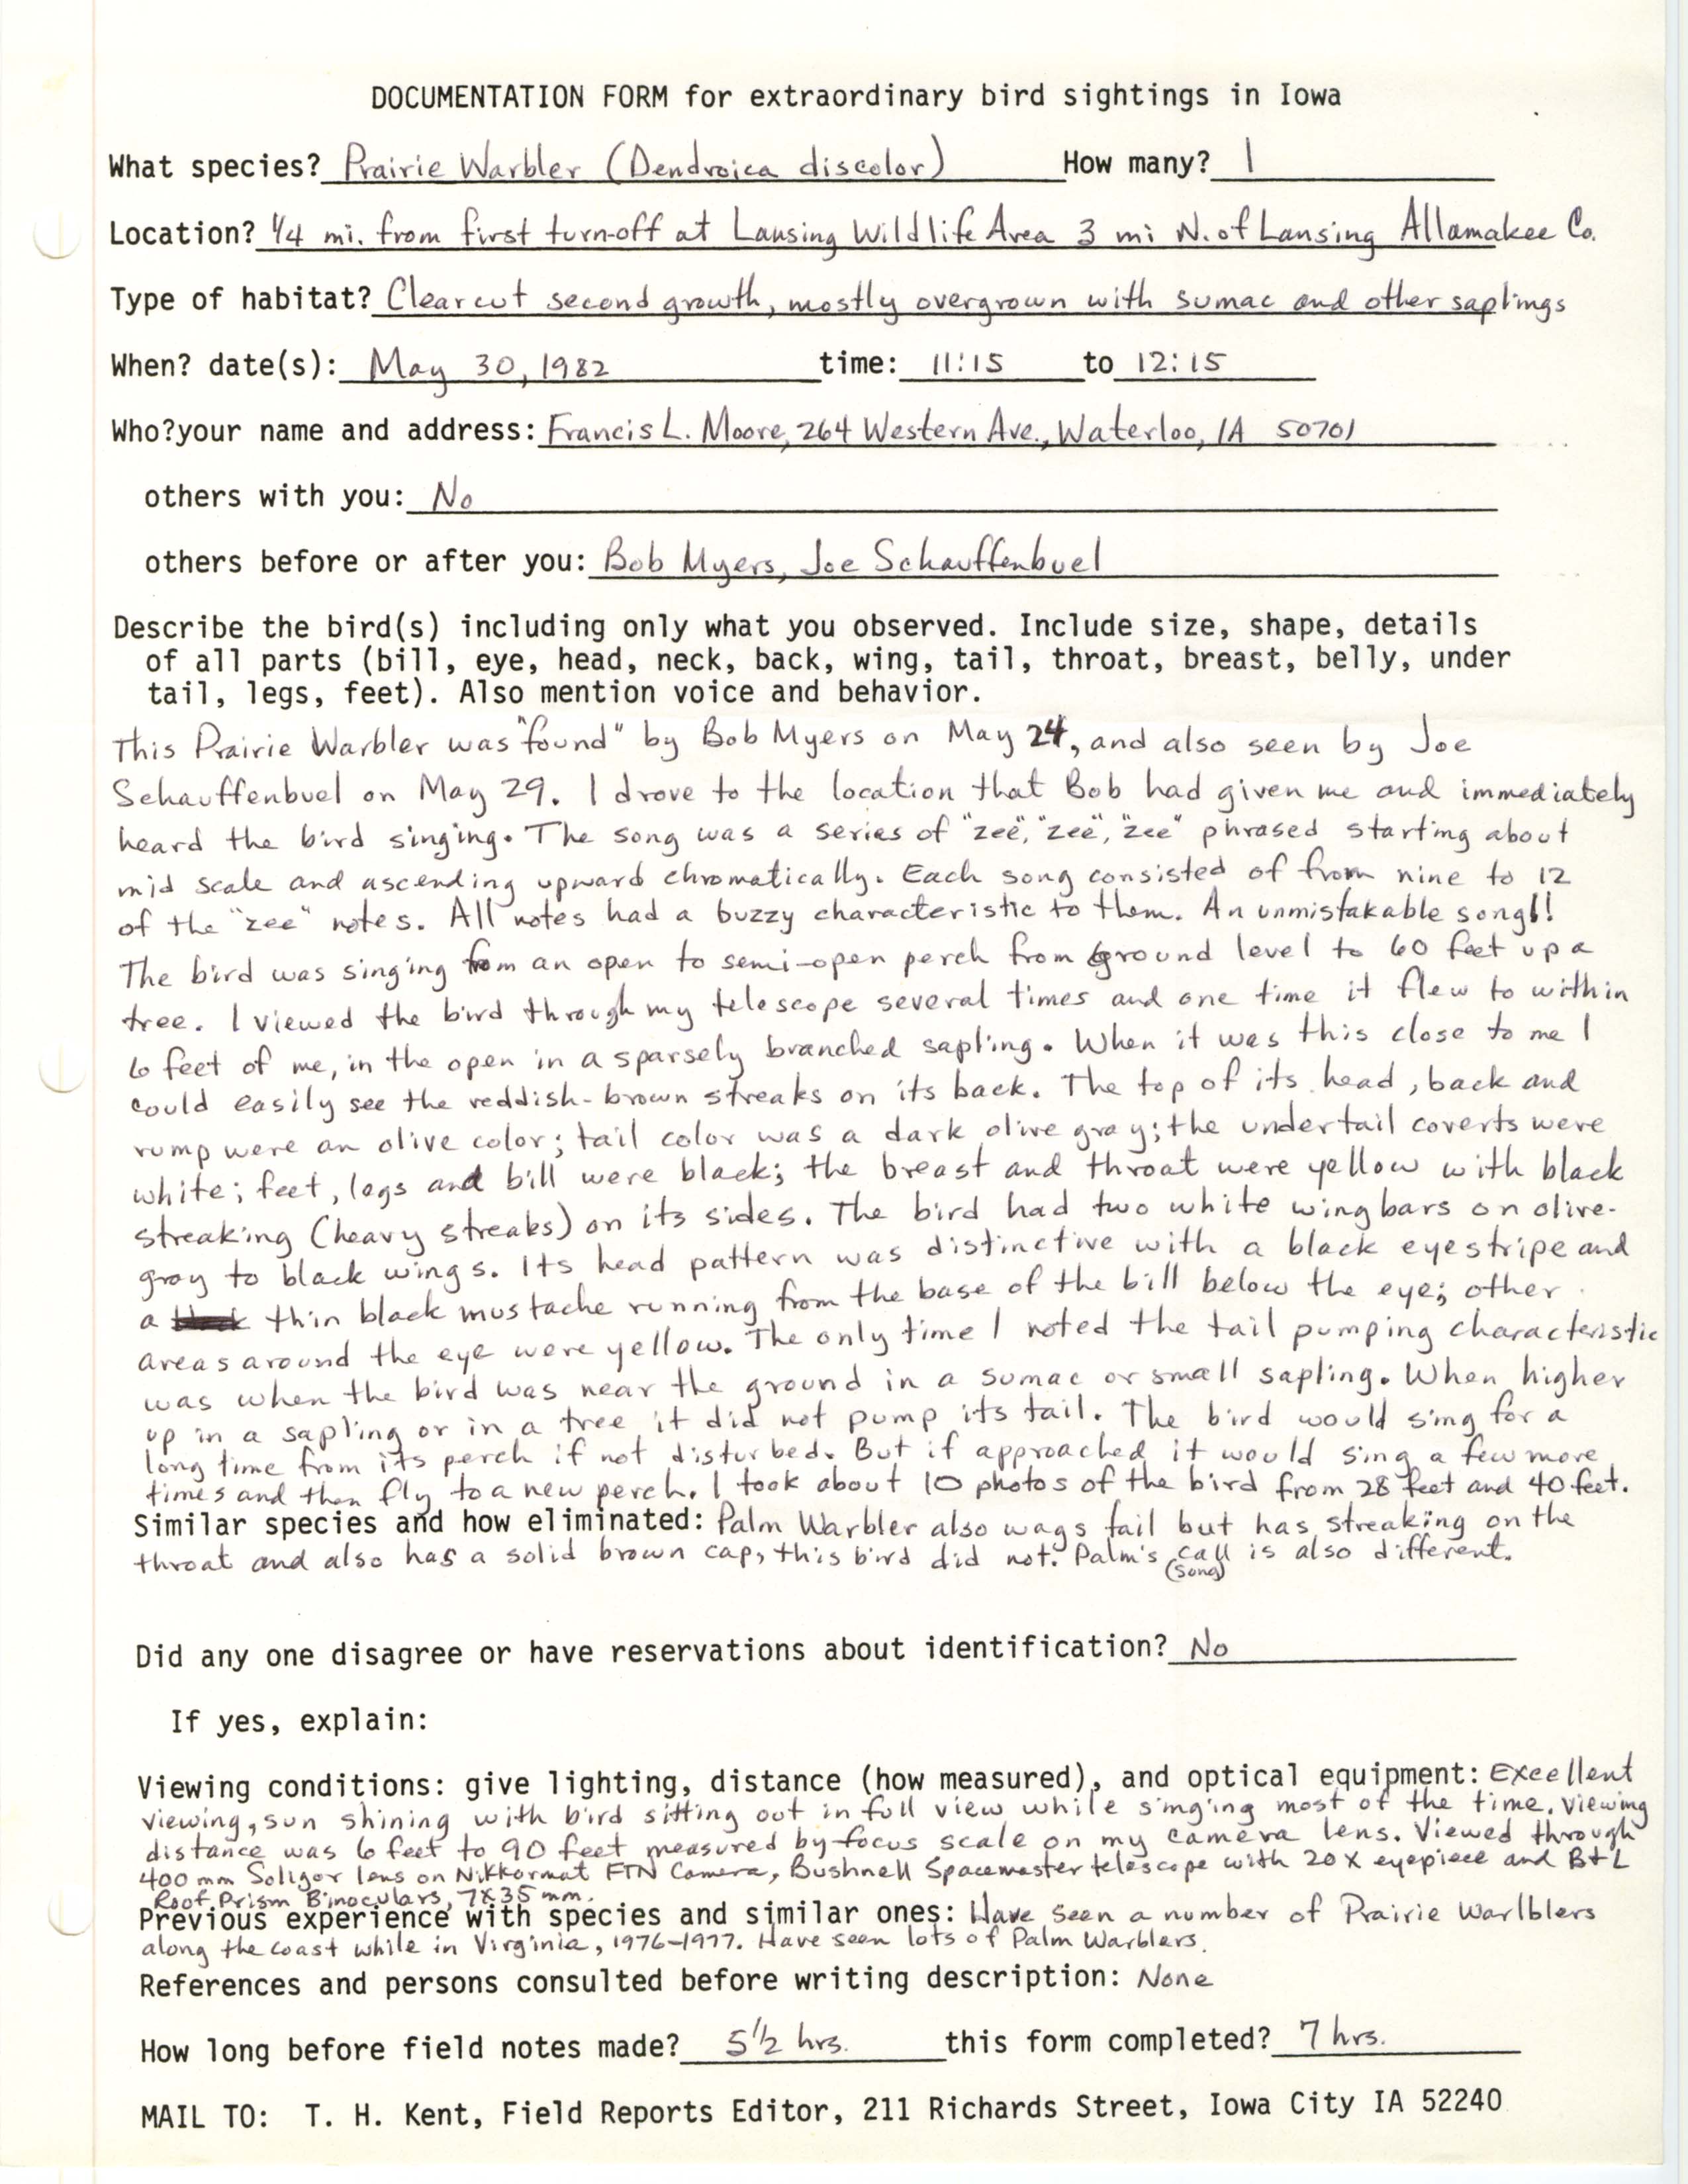 Rare bird documentation form for Prairie Warbler near Lansing Wildlife Area, 1982